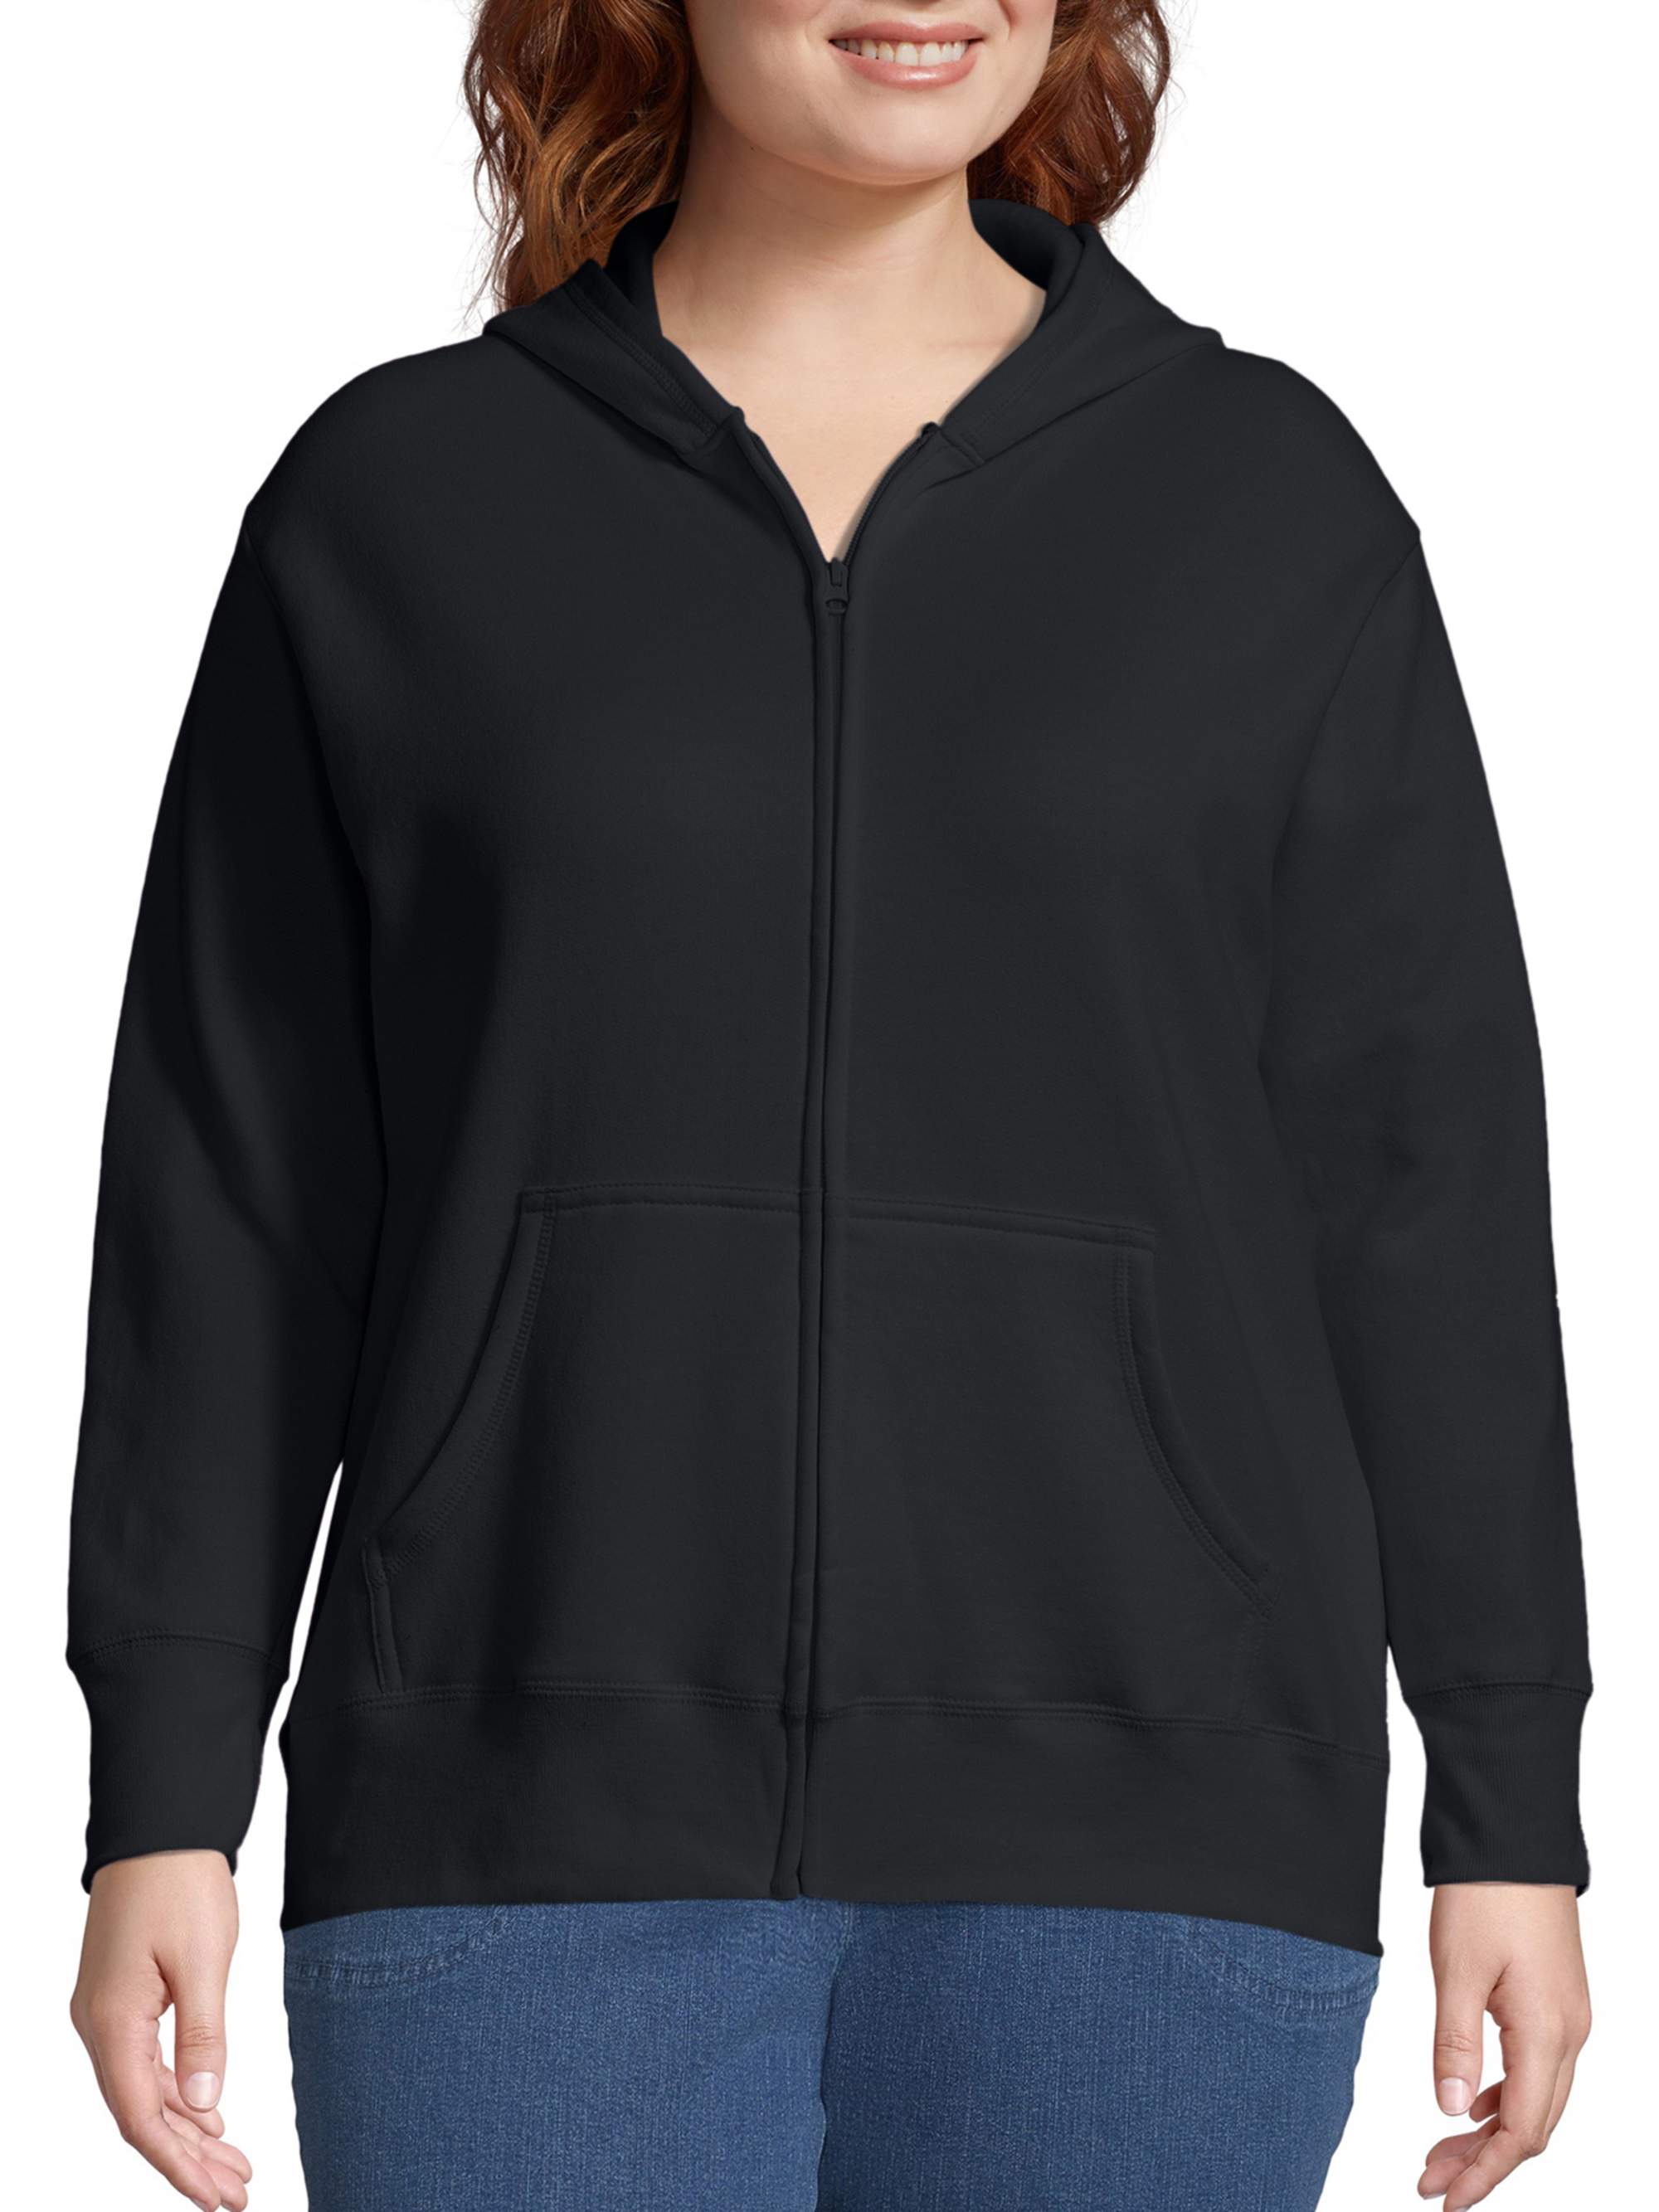 JMS by Hanes Women's Plus Size Fleece Zip Hood Jacket - image 1 of 6